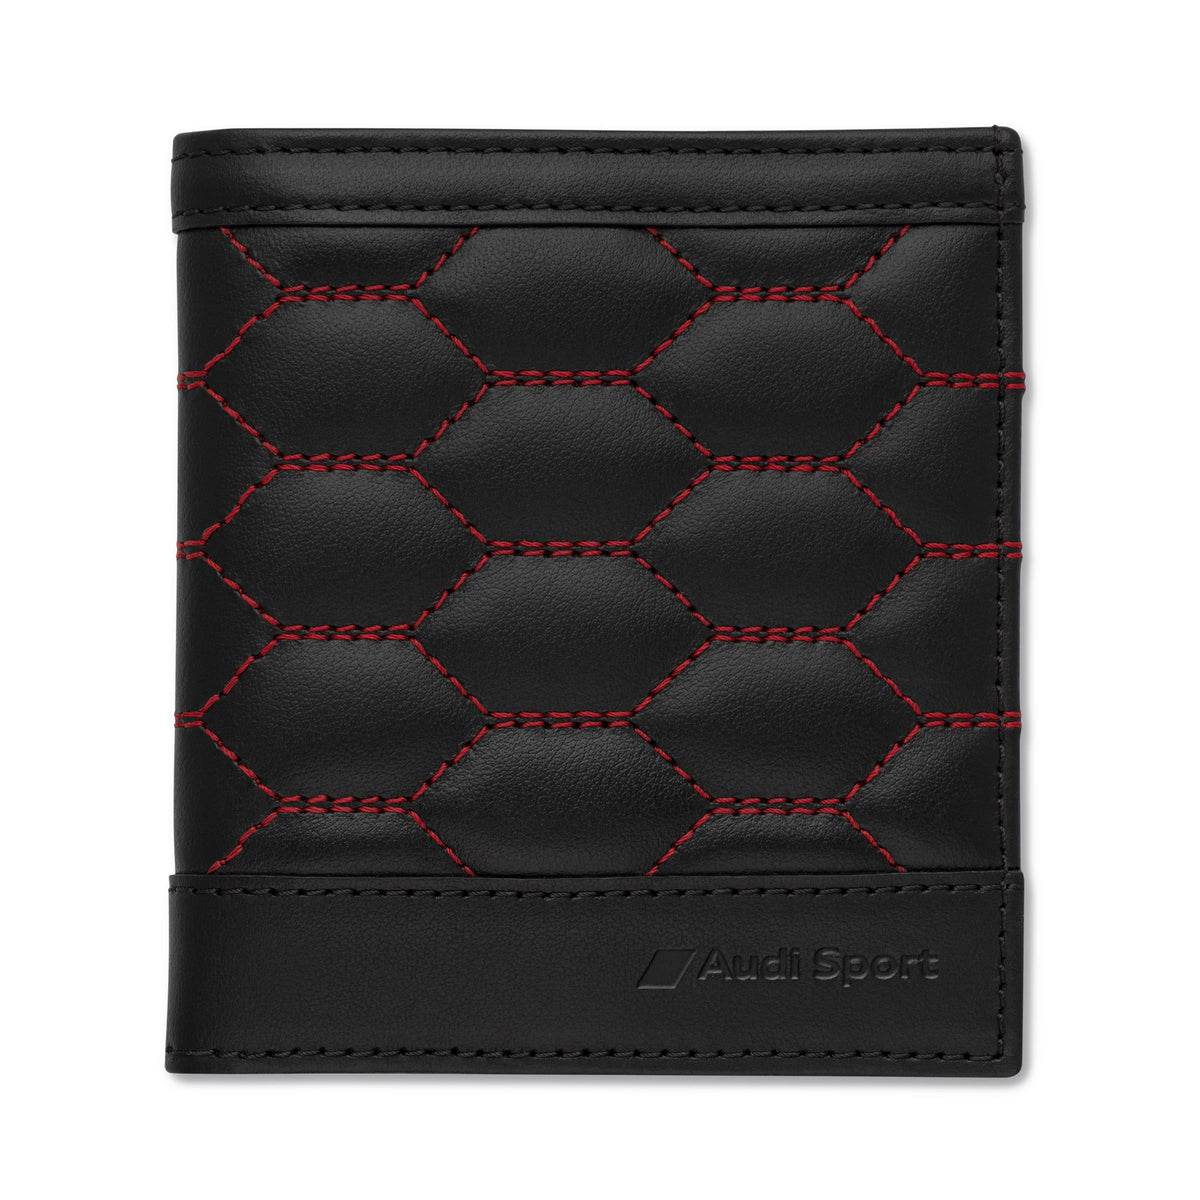 Audi Sport wallet leather small, black-red | Audi Store Australia